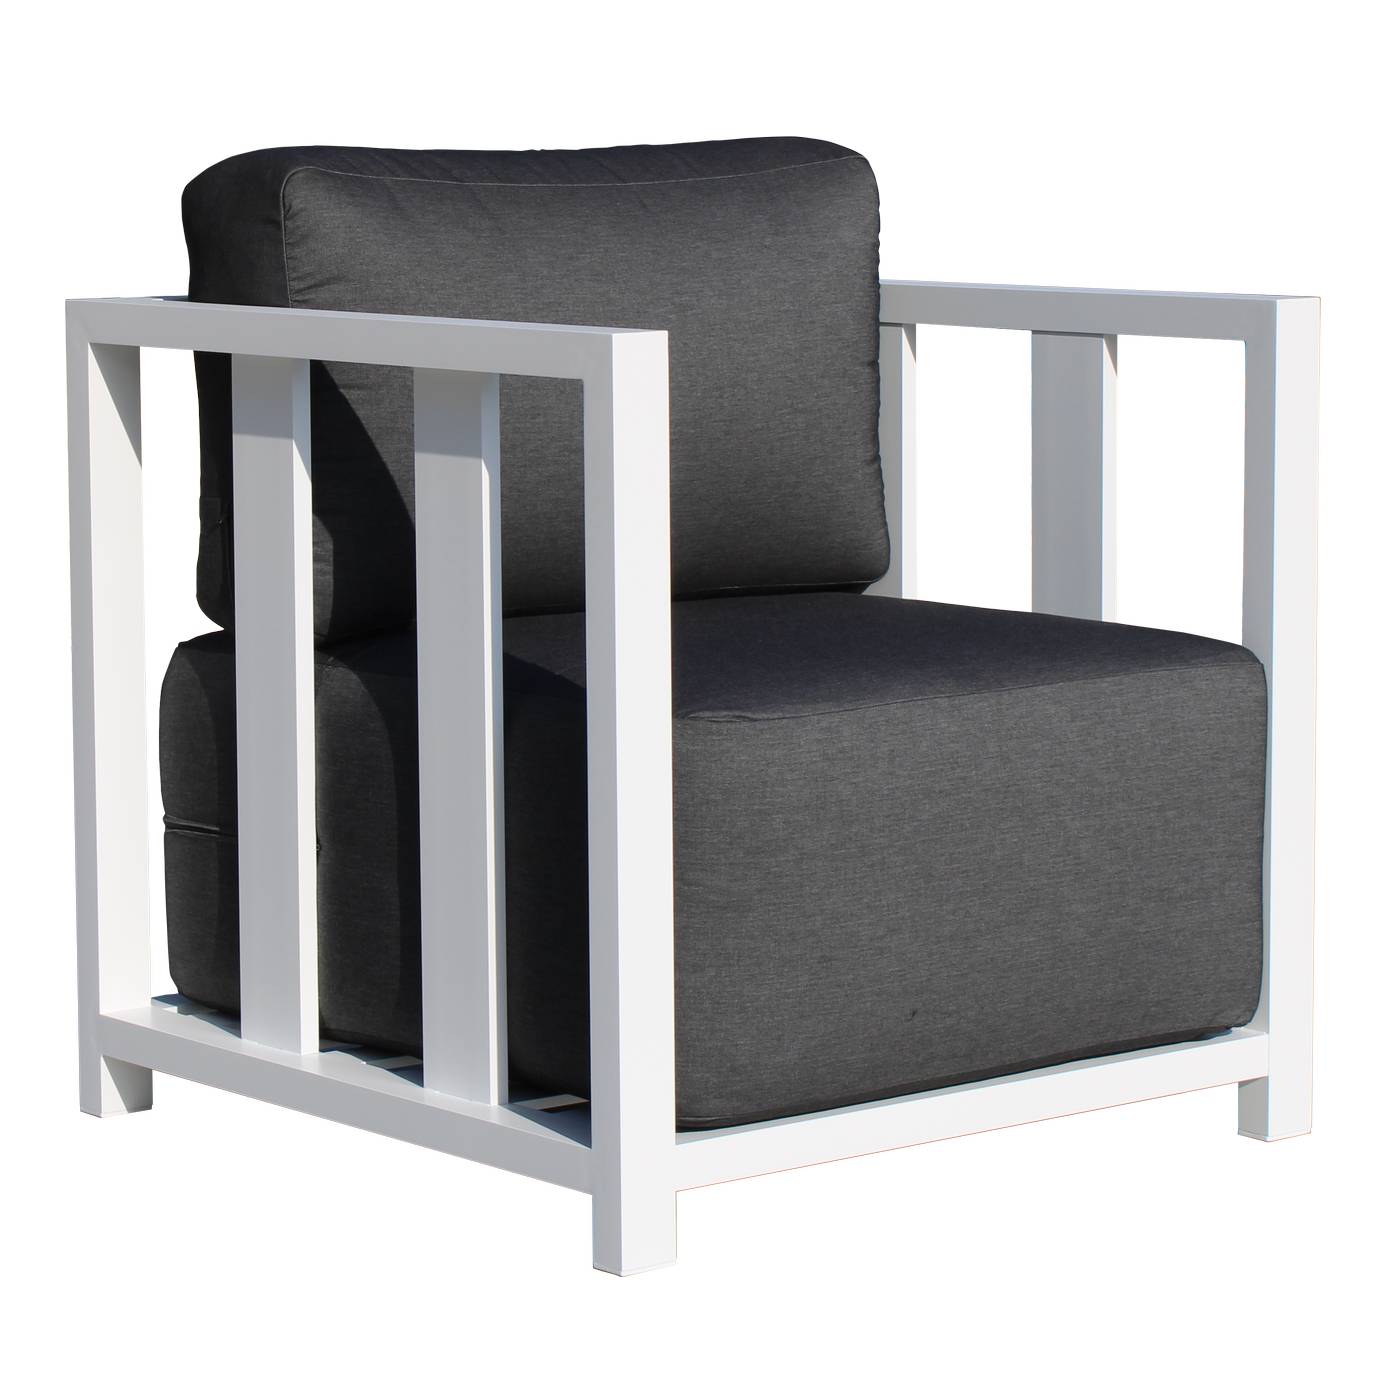 Set Aluminio Ilinois-8 - Conjunto de aluminio con cojines extra grandes: sofá de 3 plazas + 2 sillones + 1 mesa de centro. Colores: blanco, antracita, marrón, champagne o plata.